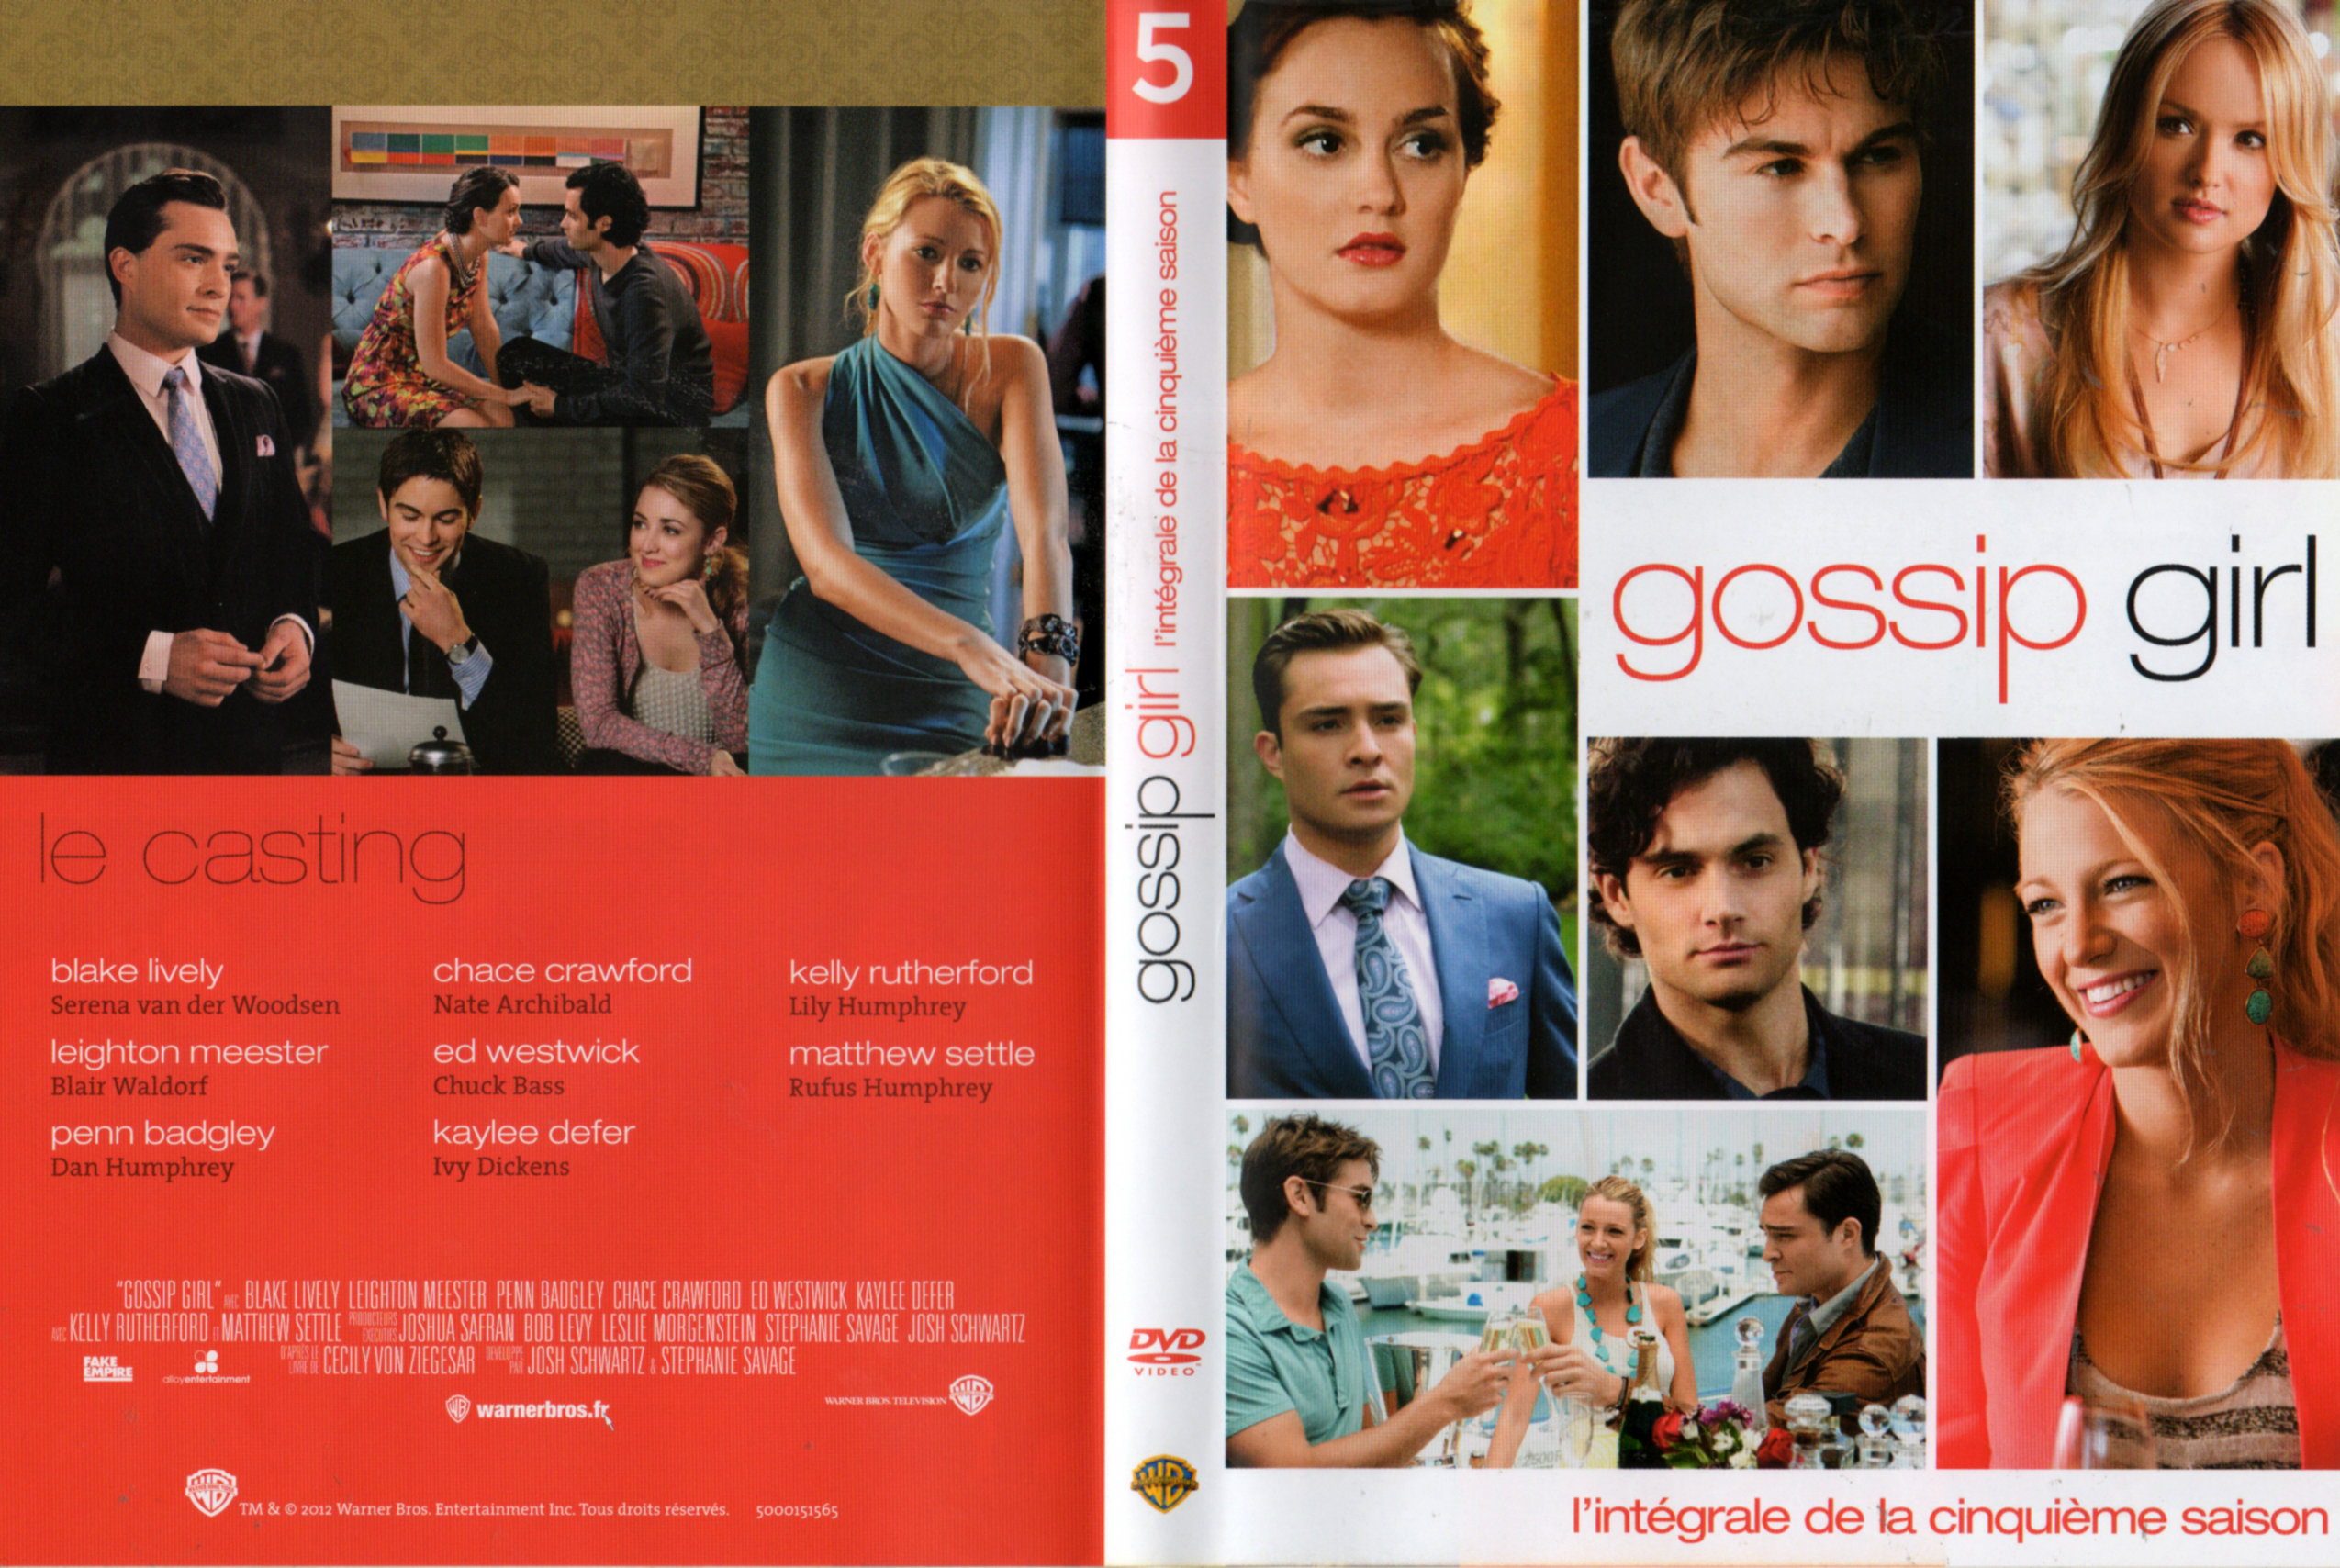 Jaquette DVD Gossip girl Saison 5 COFFRET v2